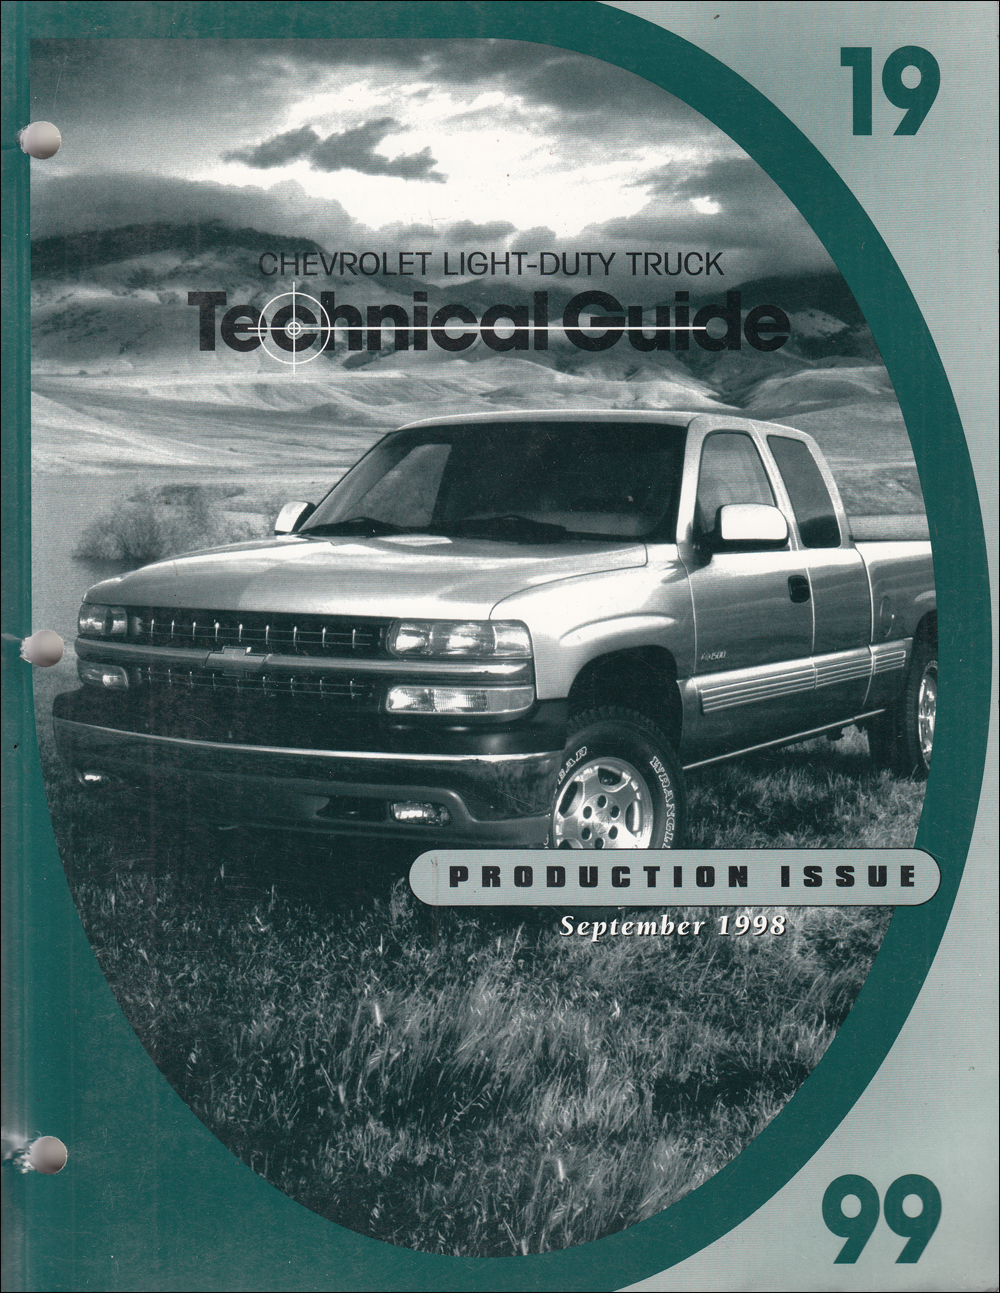 1999 Chevrolet Truck Technical Guide Dealer Album Original Production Issue